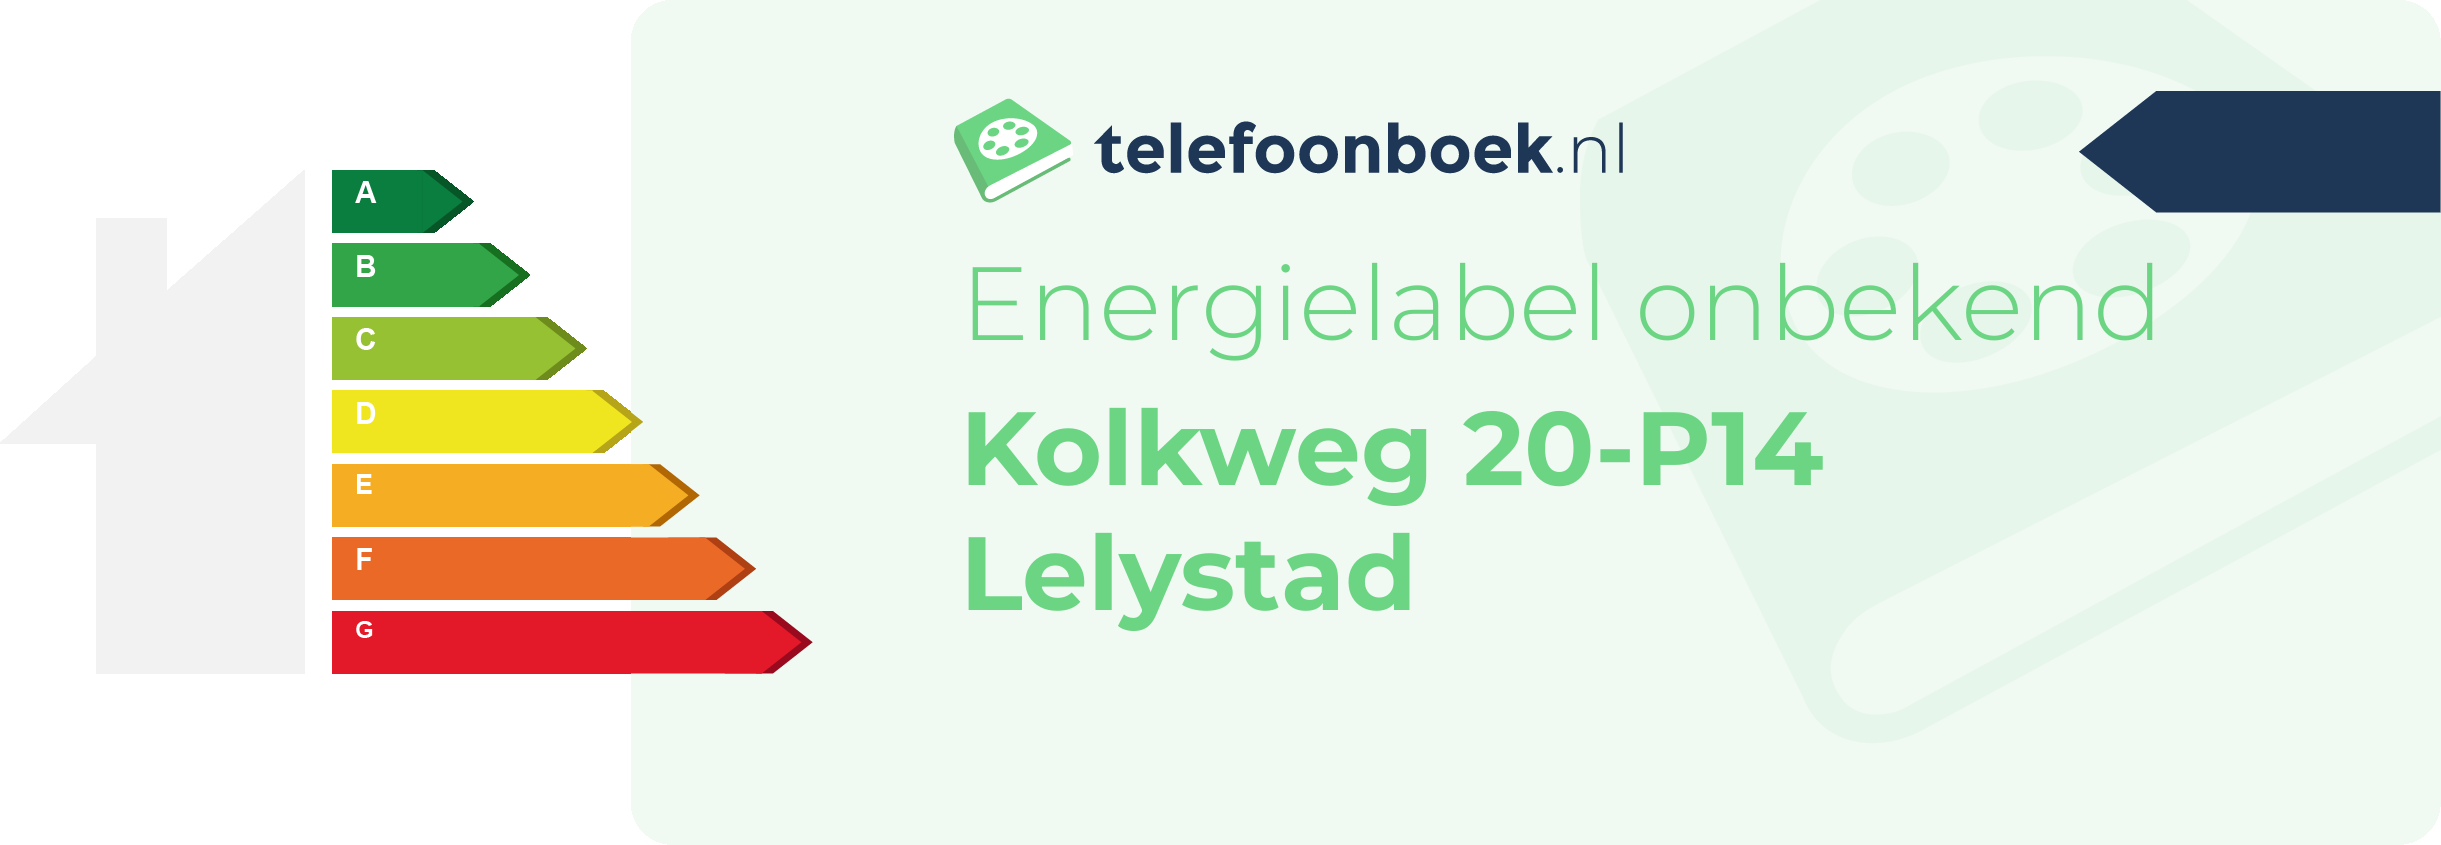 Energielabel Kolkweg 20-P14 Lelystad